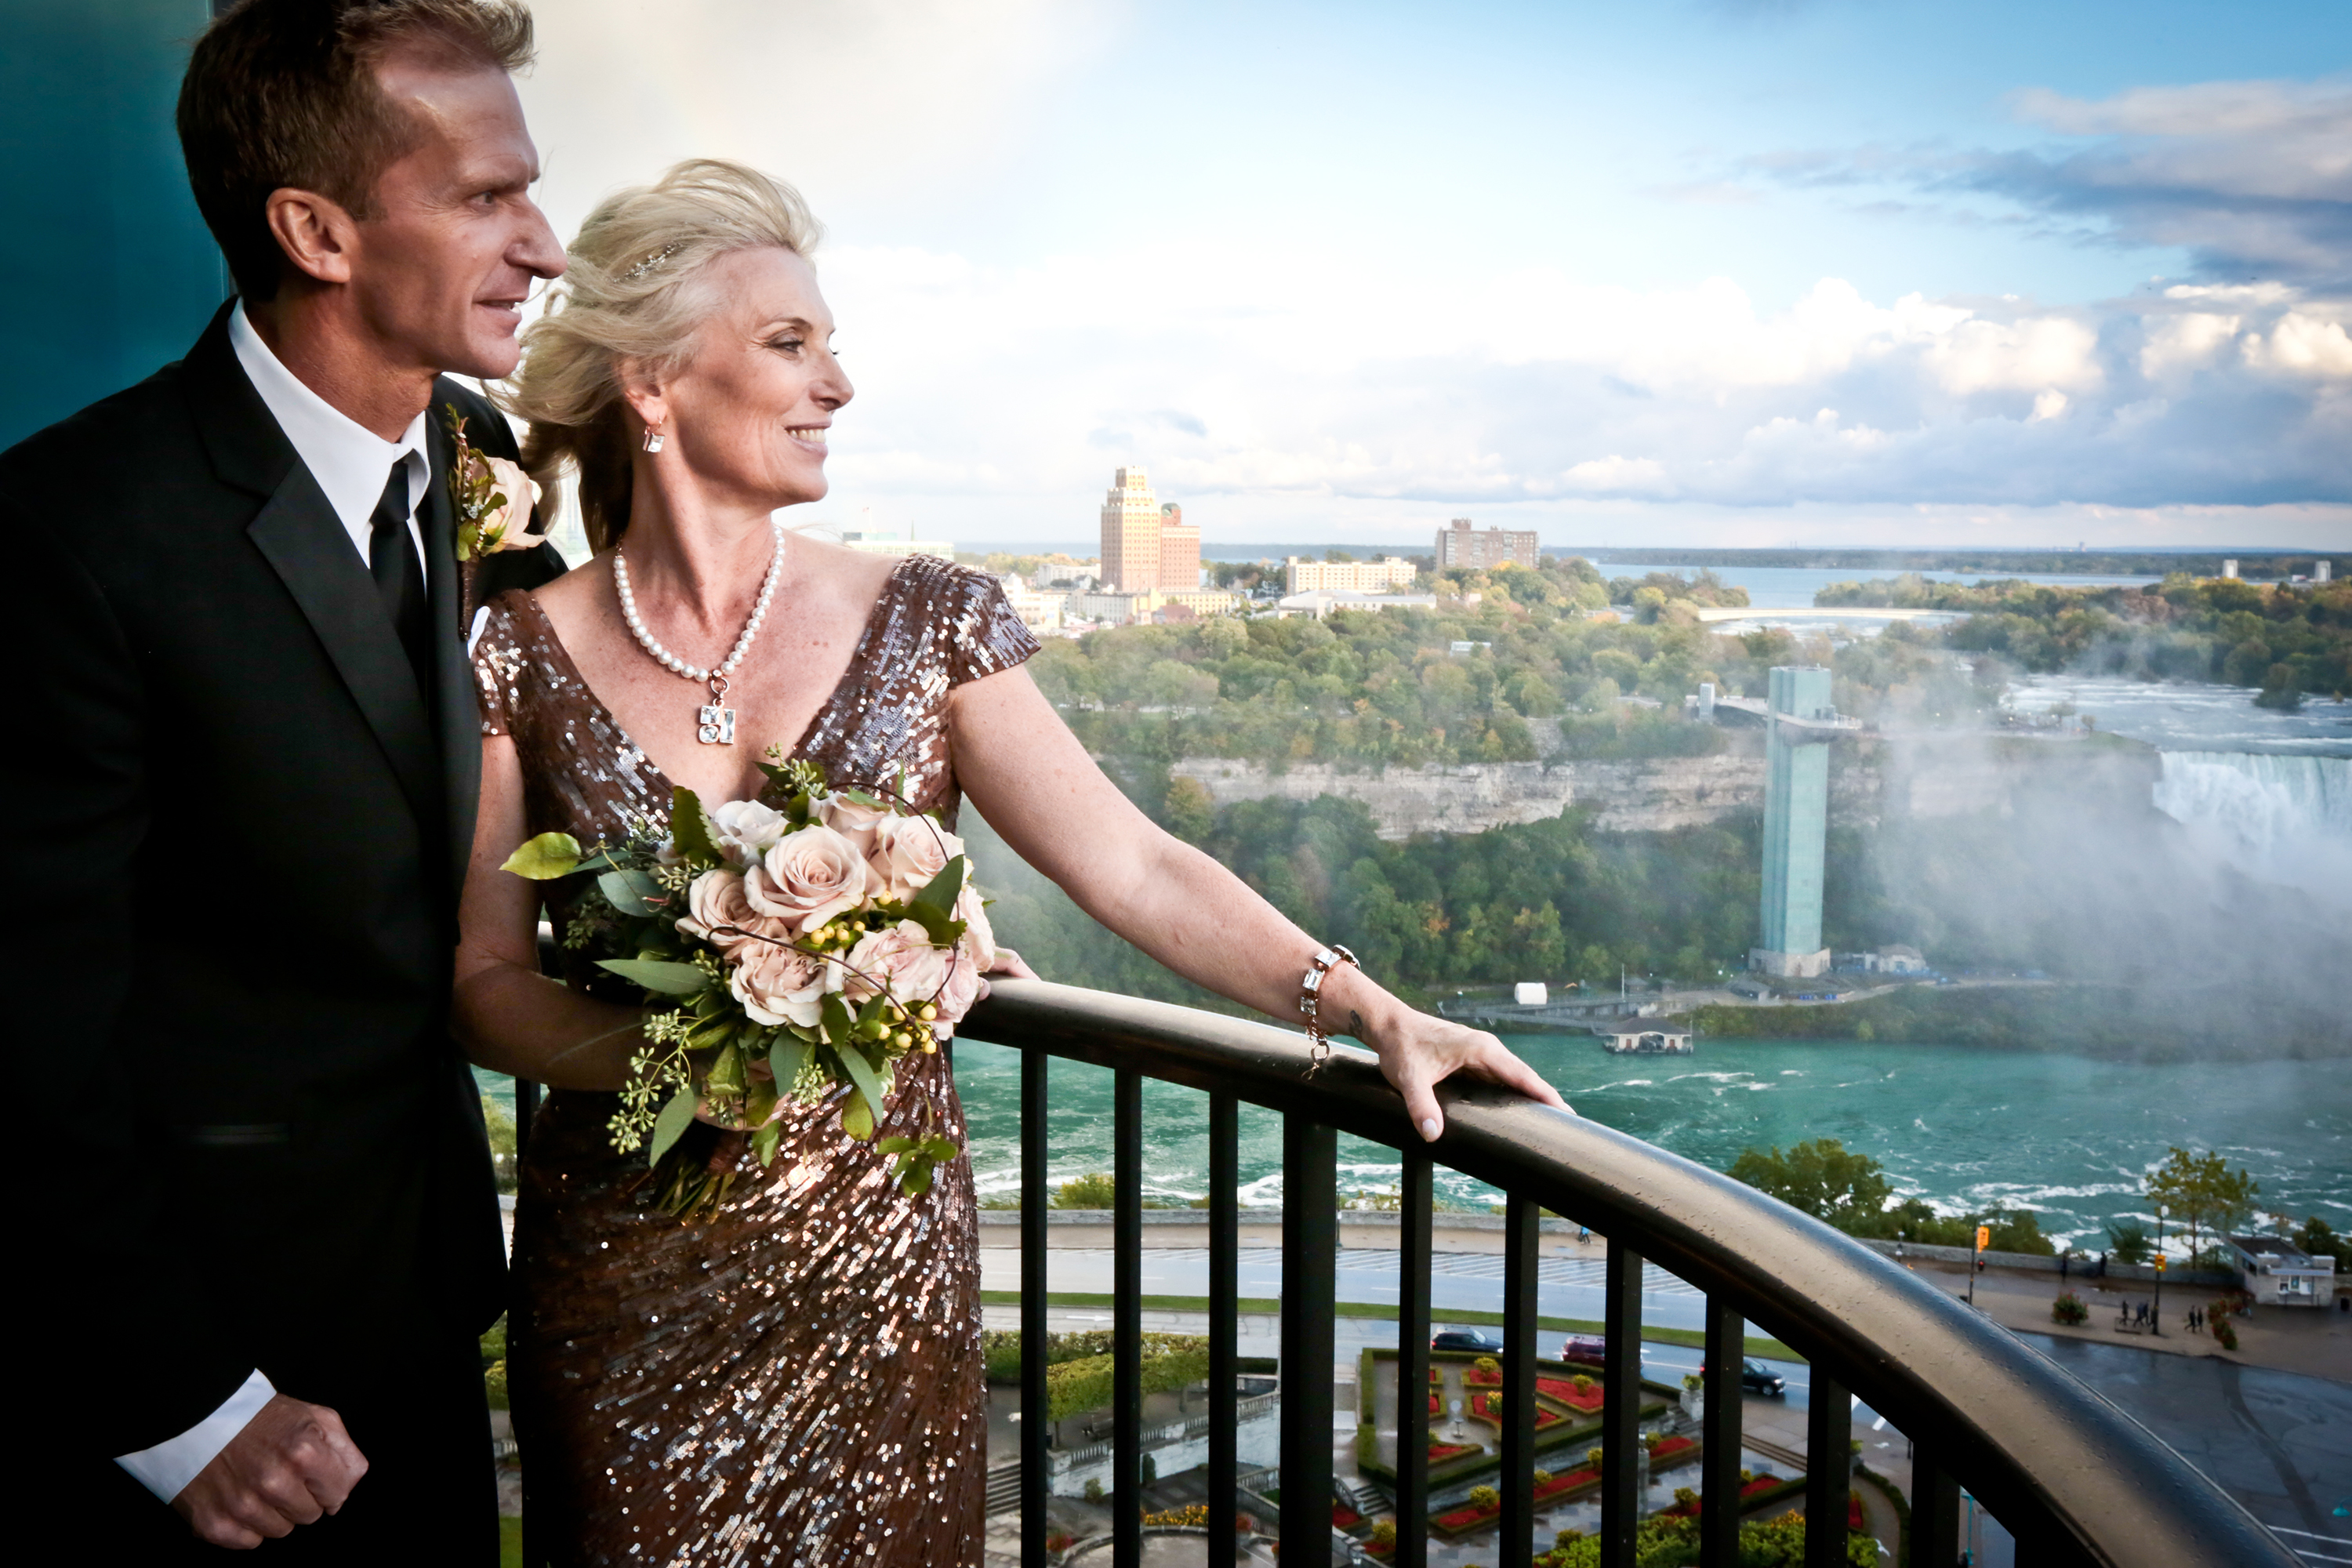 Niagara Falls Ons Dating In Widowed